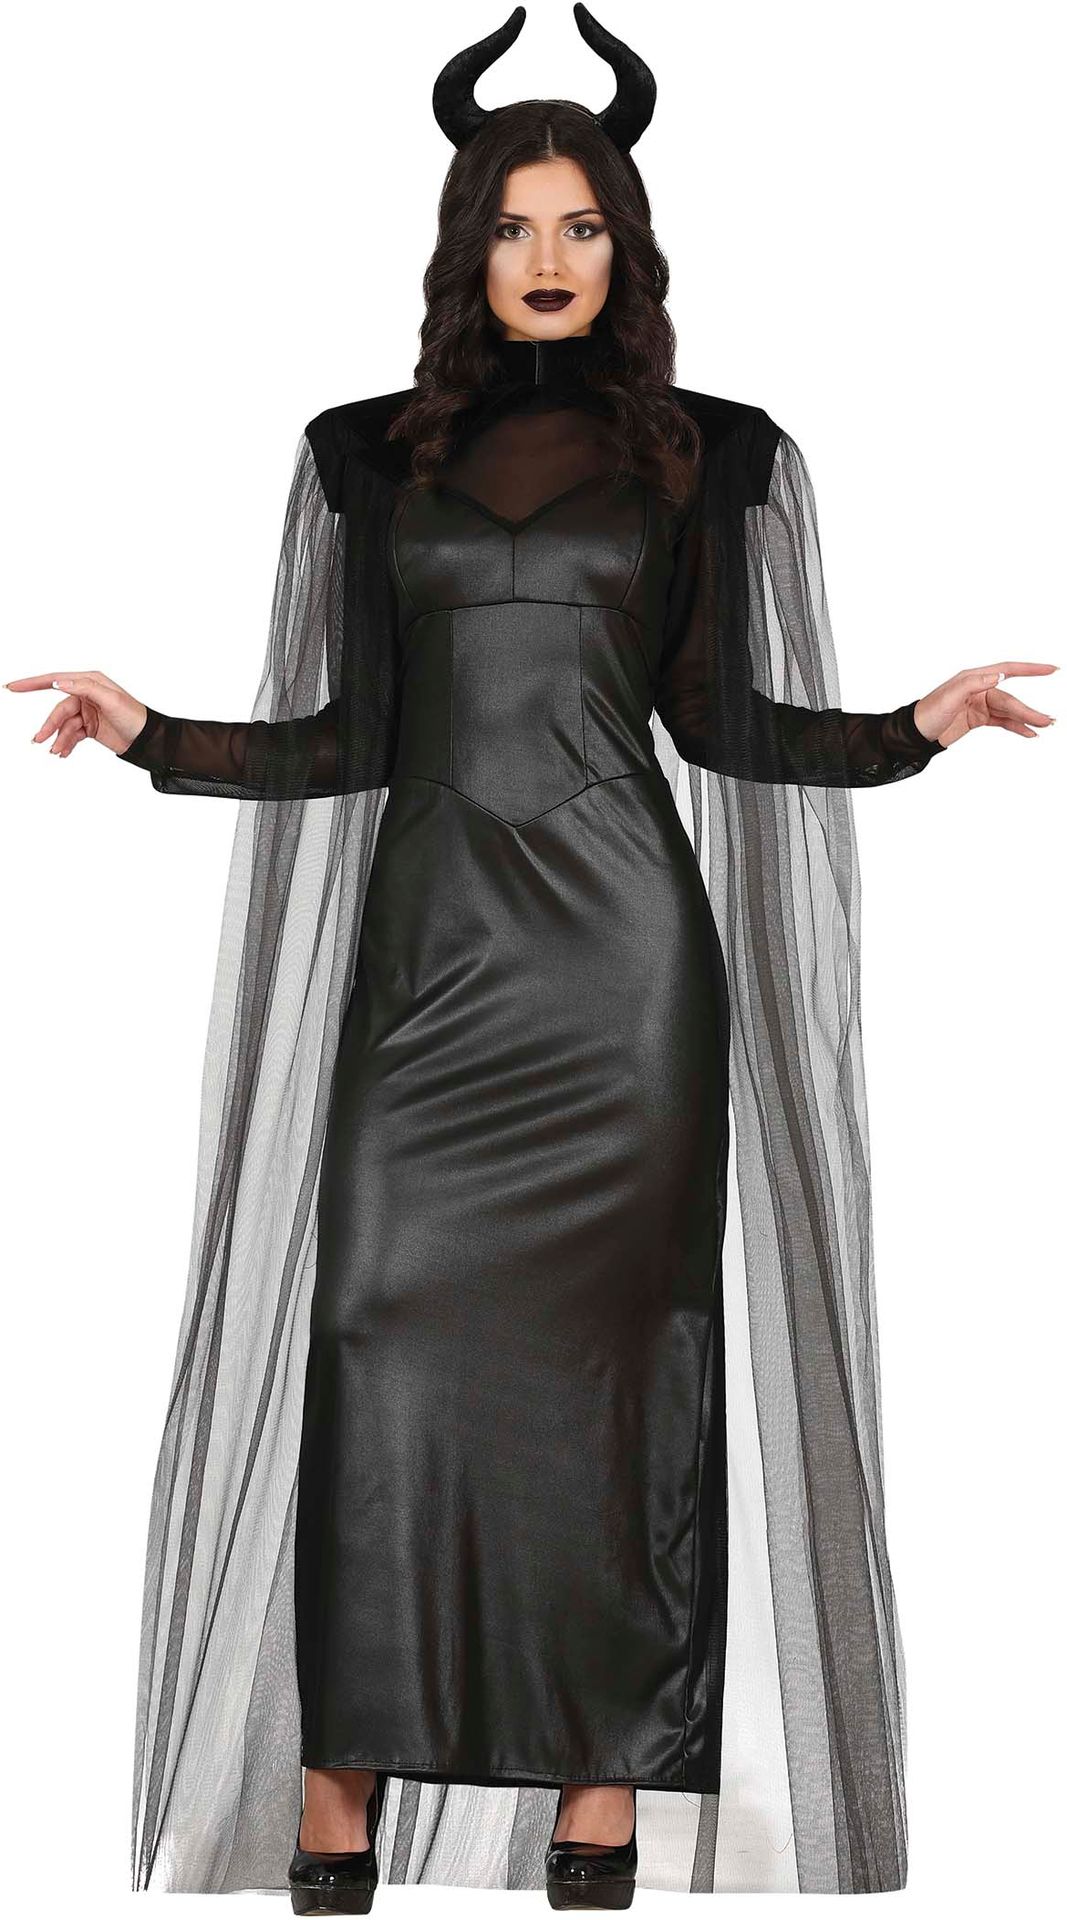 Malifecent halloween jurk vrouw